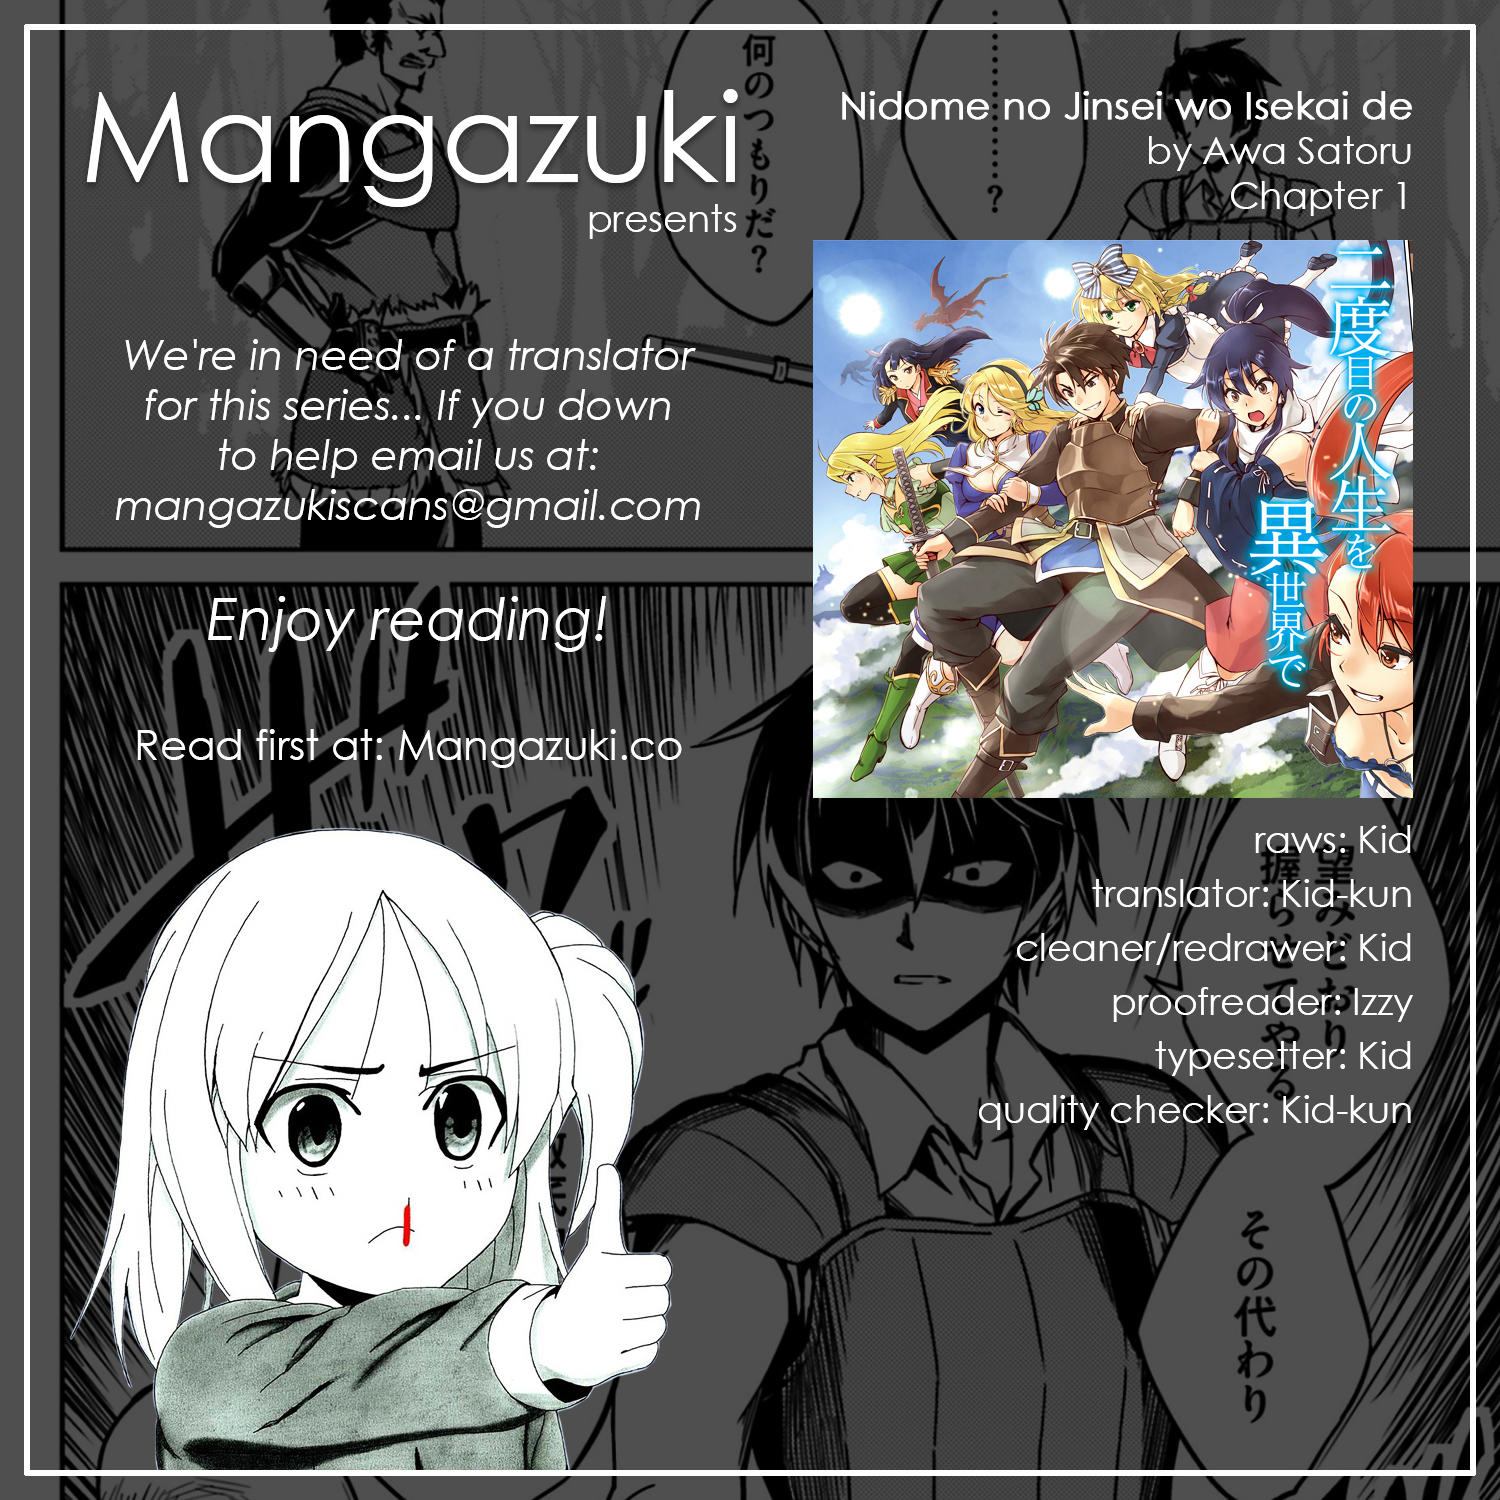 Are there any good manga sites like Mangazuki where I can read